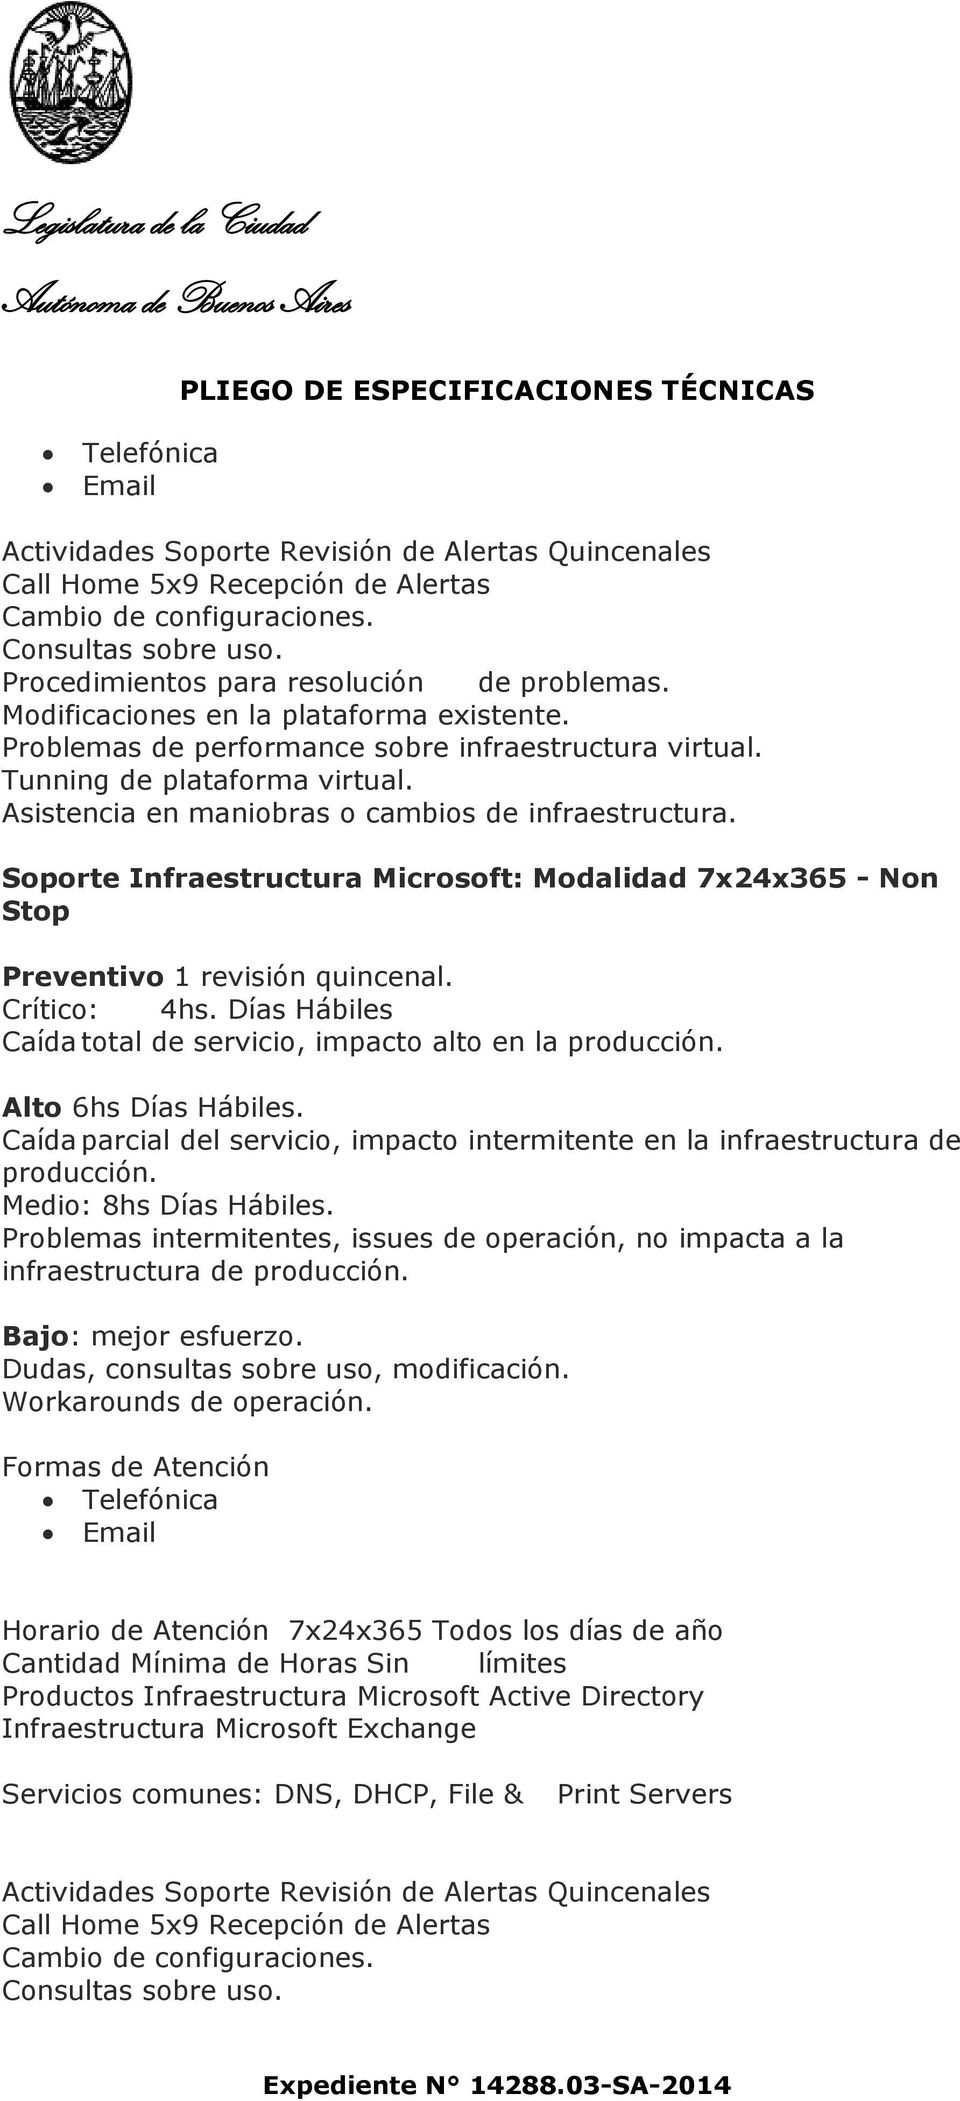 Soporte Infraestructura Microsoft: Modalidad 7x24x365 - Non Stop Preventivo 1 revisión quincenal. Crítico: 4hs. Días Hábiles Caída total de servicio, impacto alto en la producción.